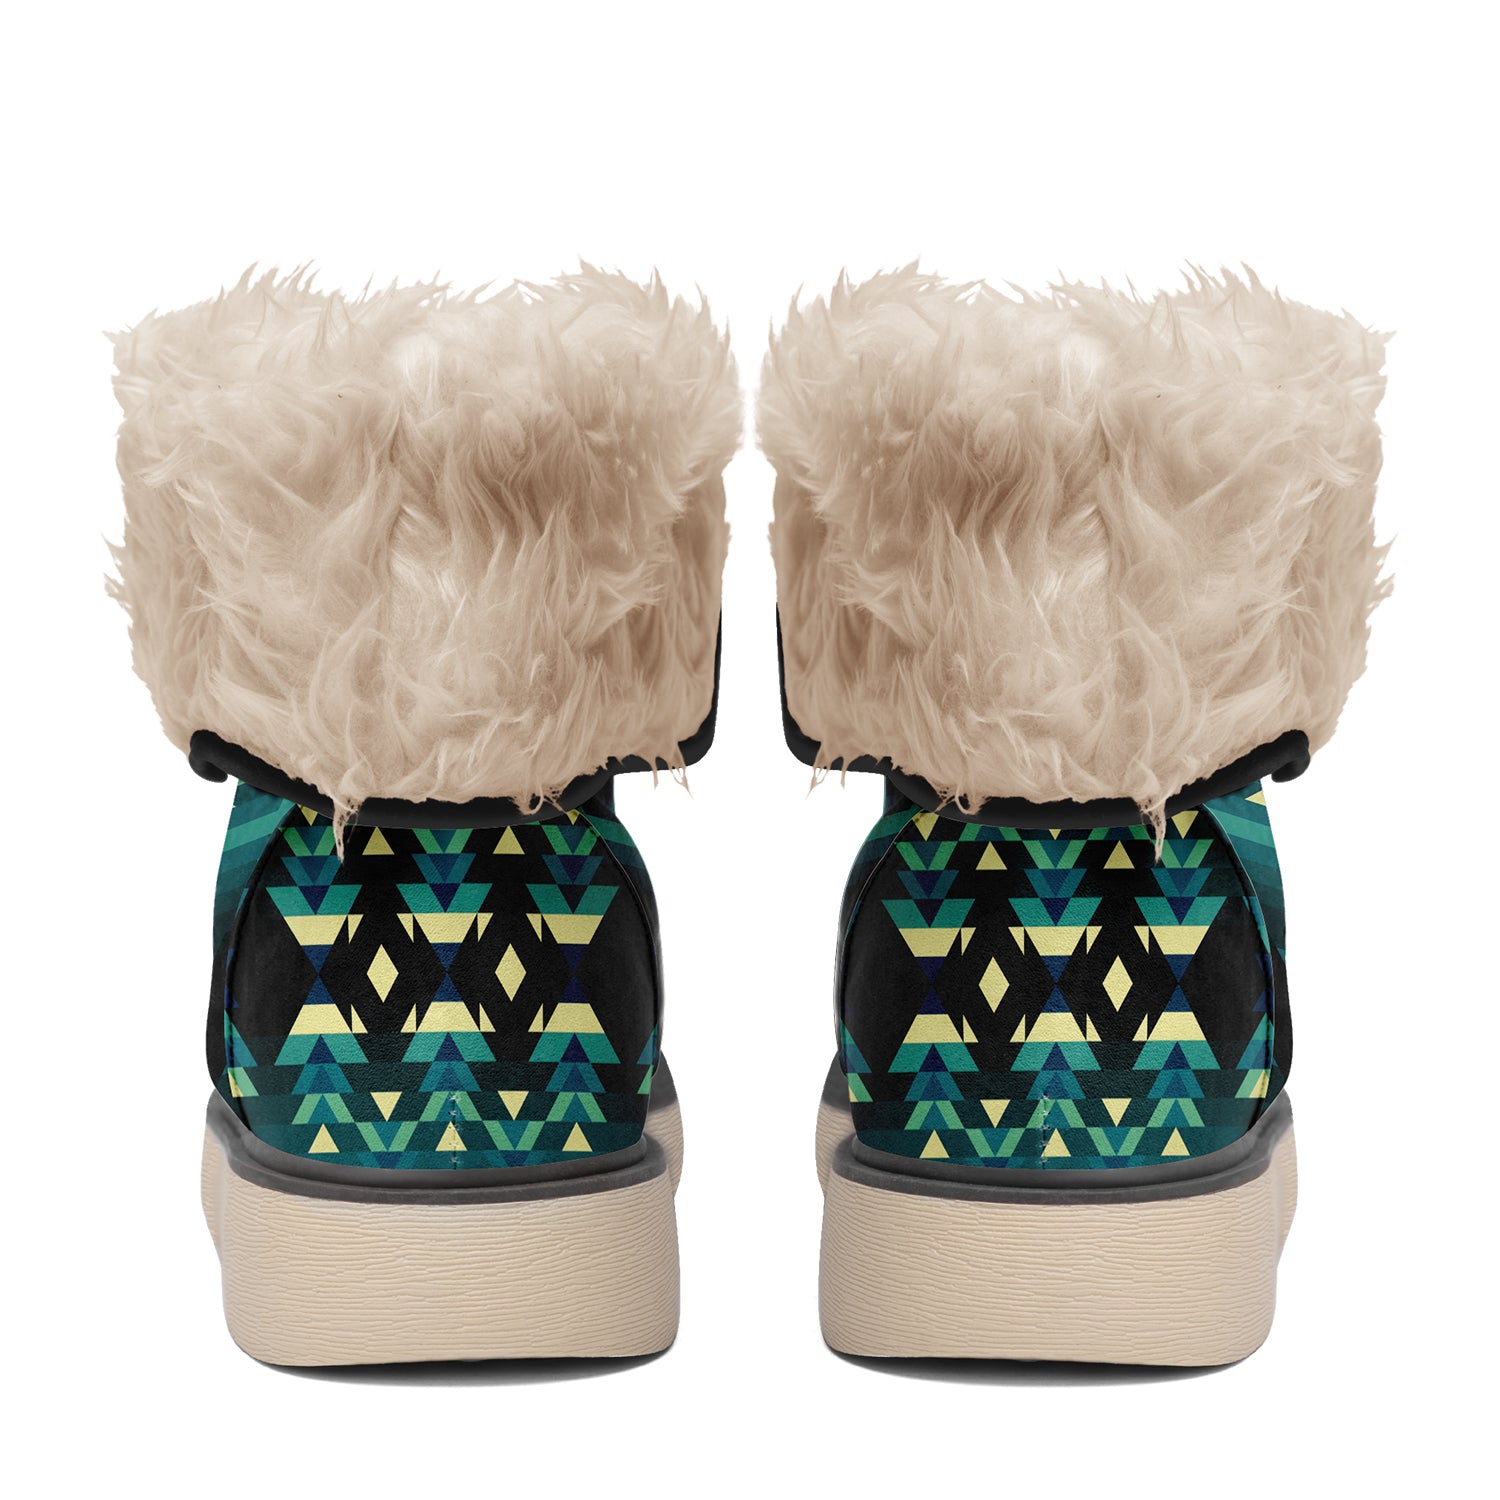 Inspire Green Polar Winter Boots